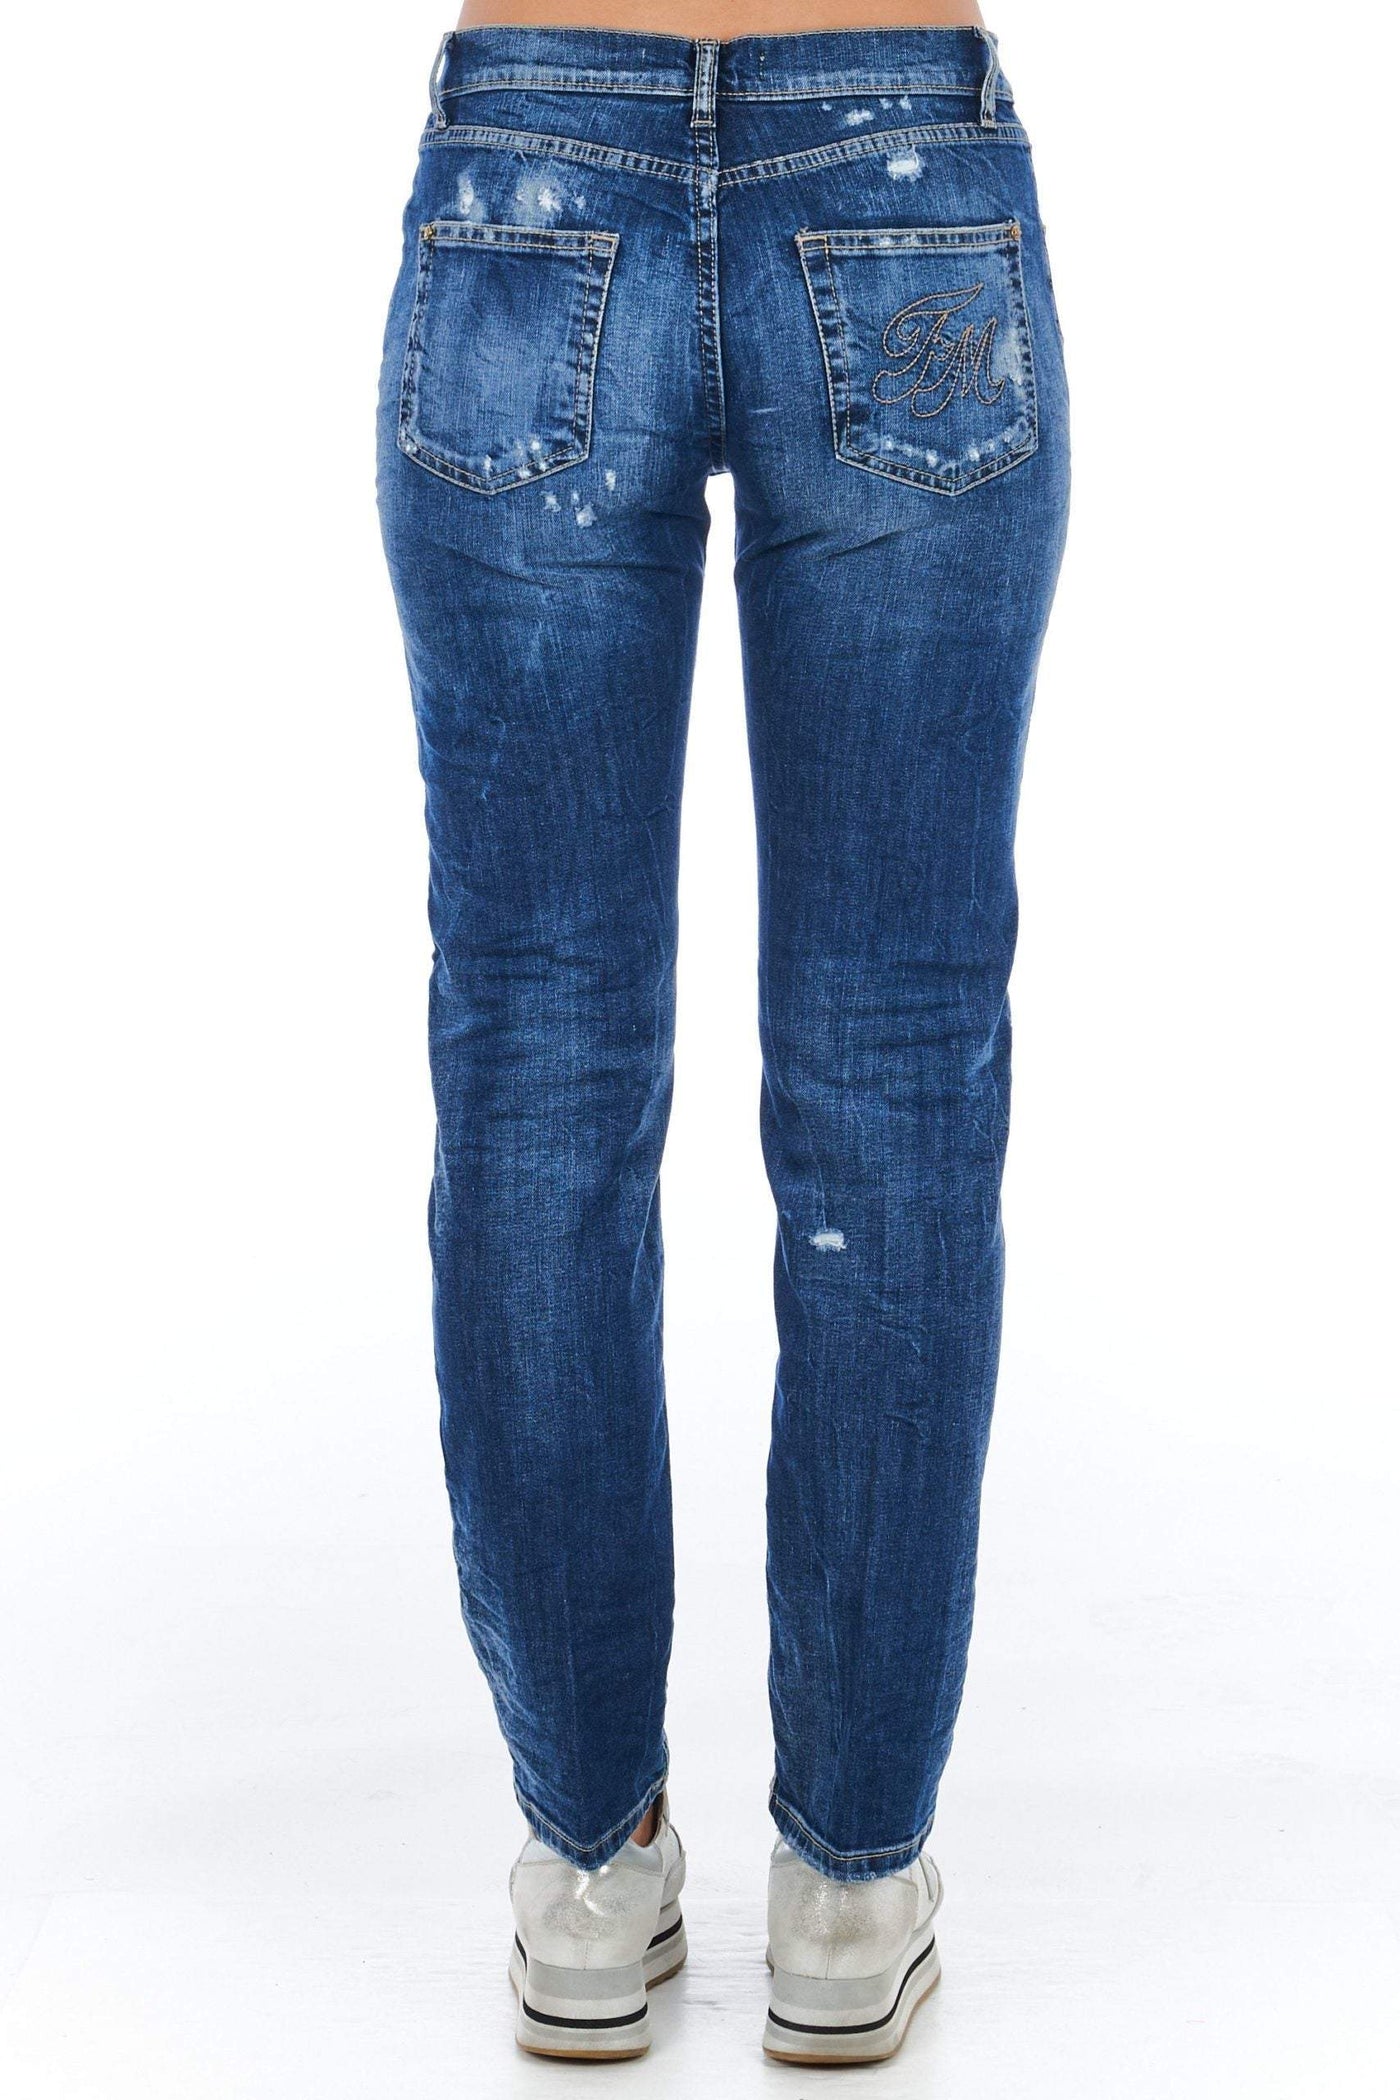 Frankie Morello Blue Cotton Jeans & Pant Blue, feed-1, Frankie Morello, Jeans & Pants - Women - Clothing, W26 | IT40 at SEYMAYKA